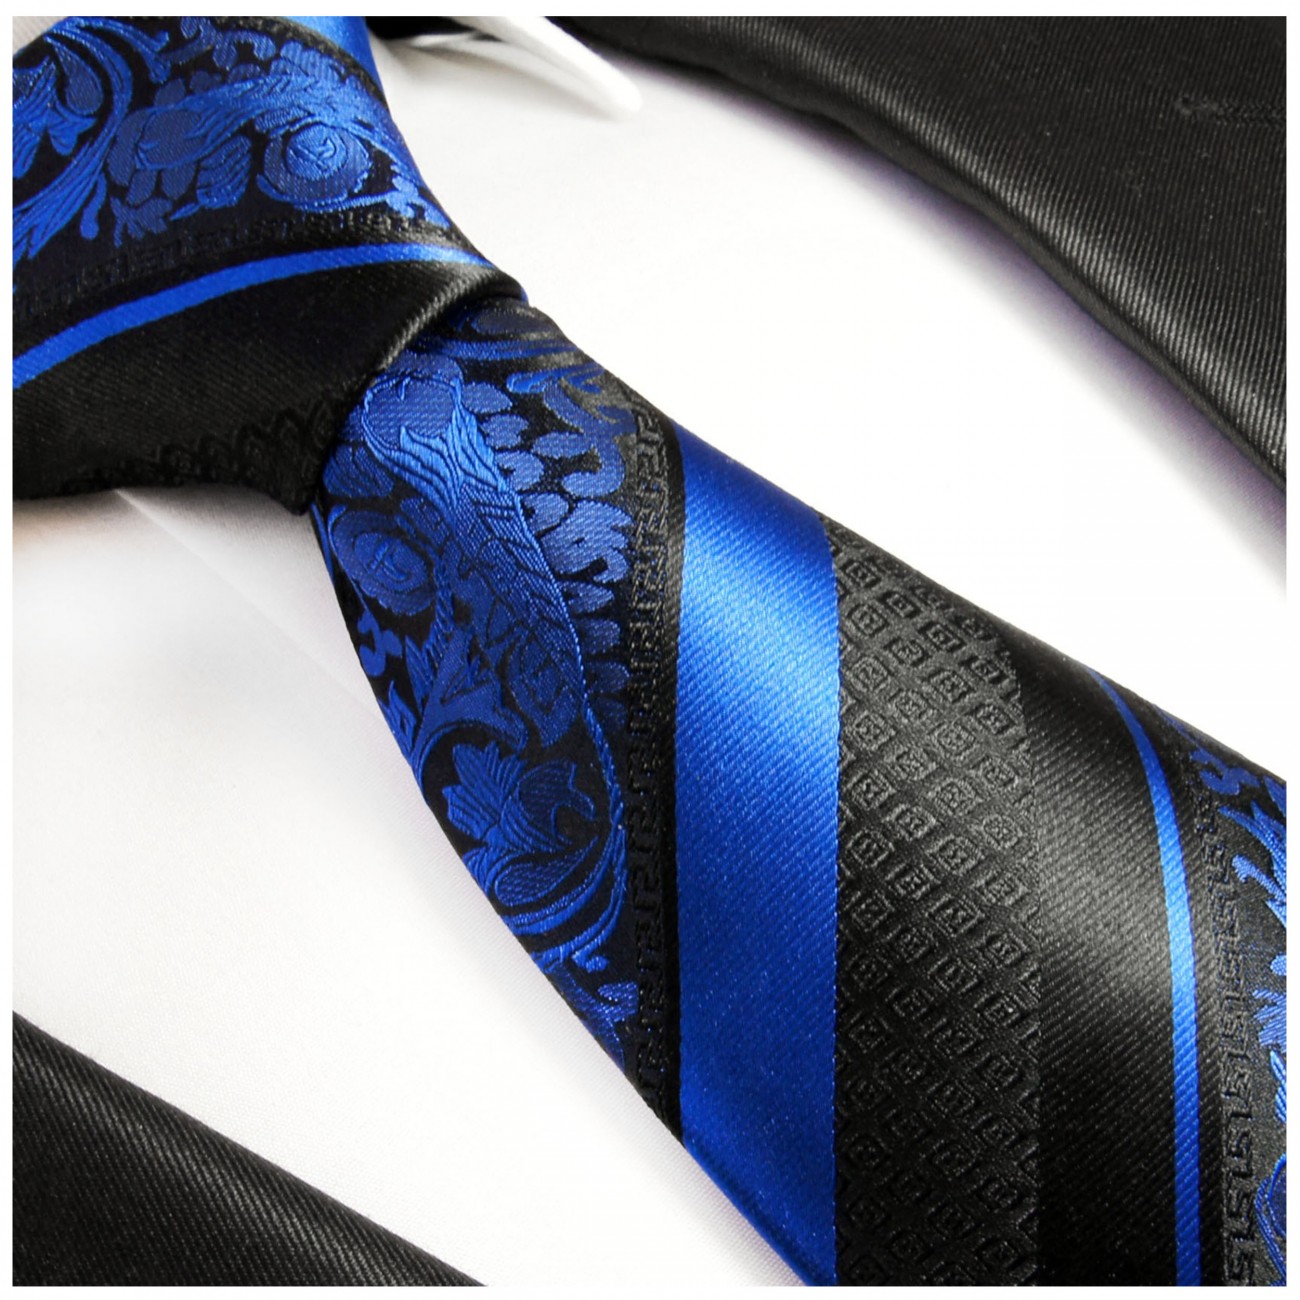 Krawatte blau schwarz barock 496